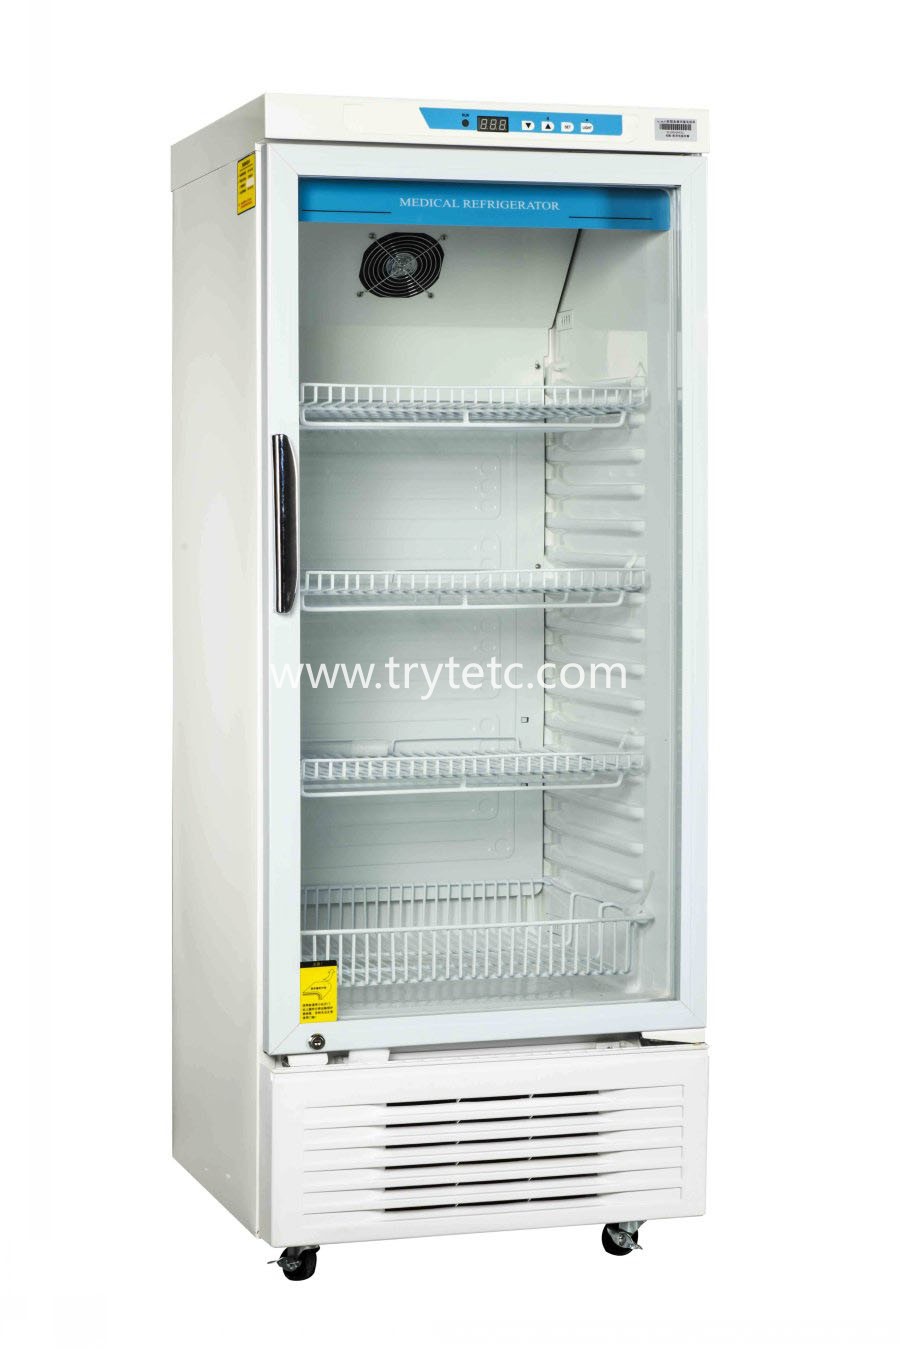 TC-260 Medical Refrigerator